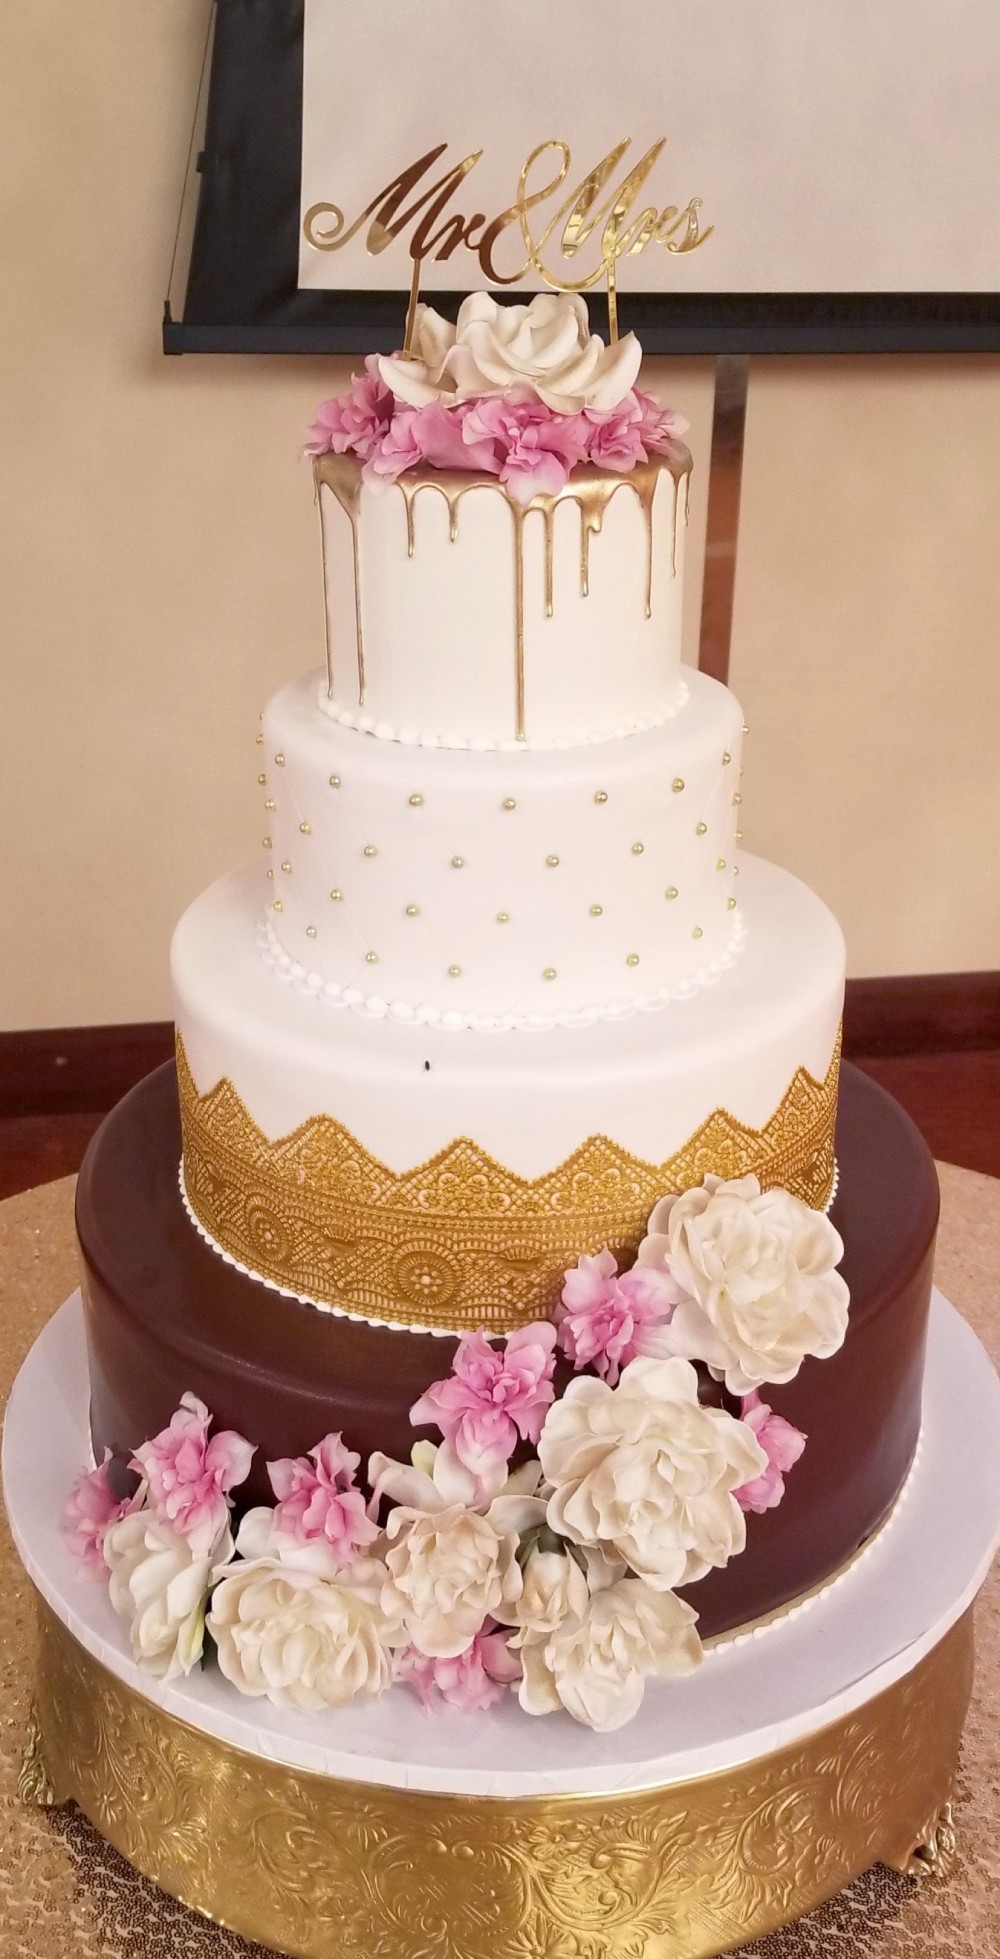  Gold and burgundy wedding cake